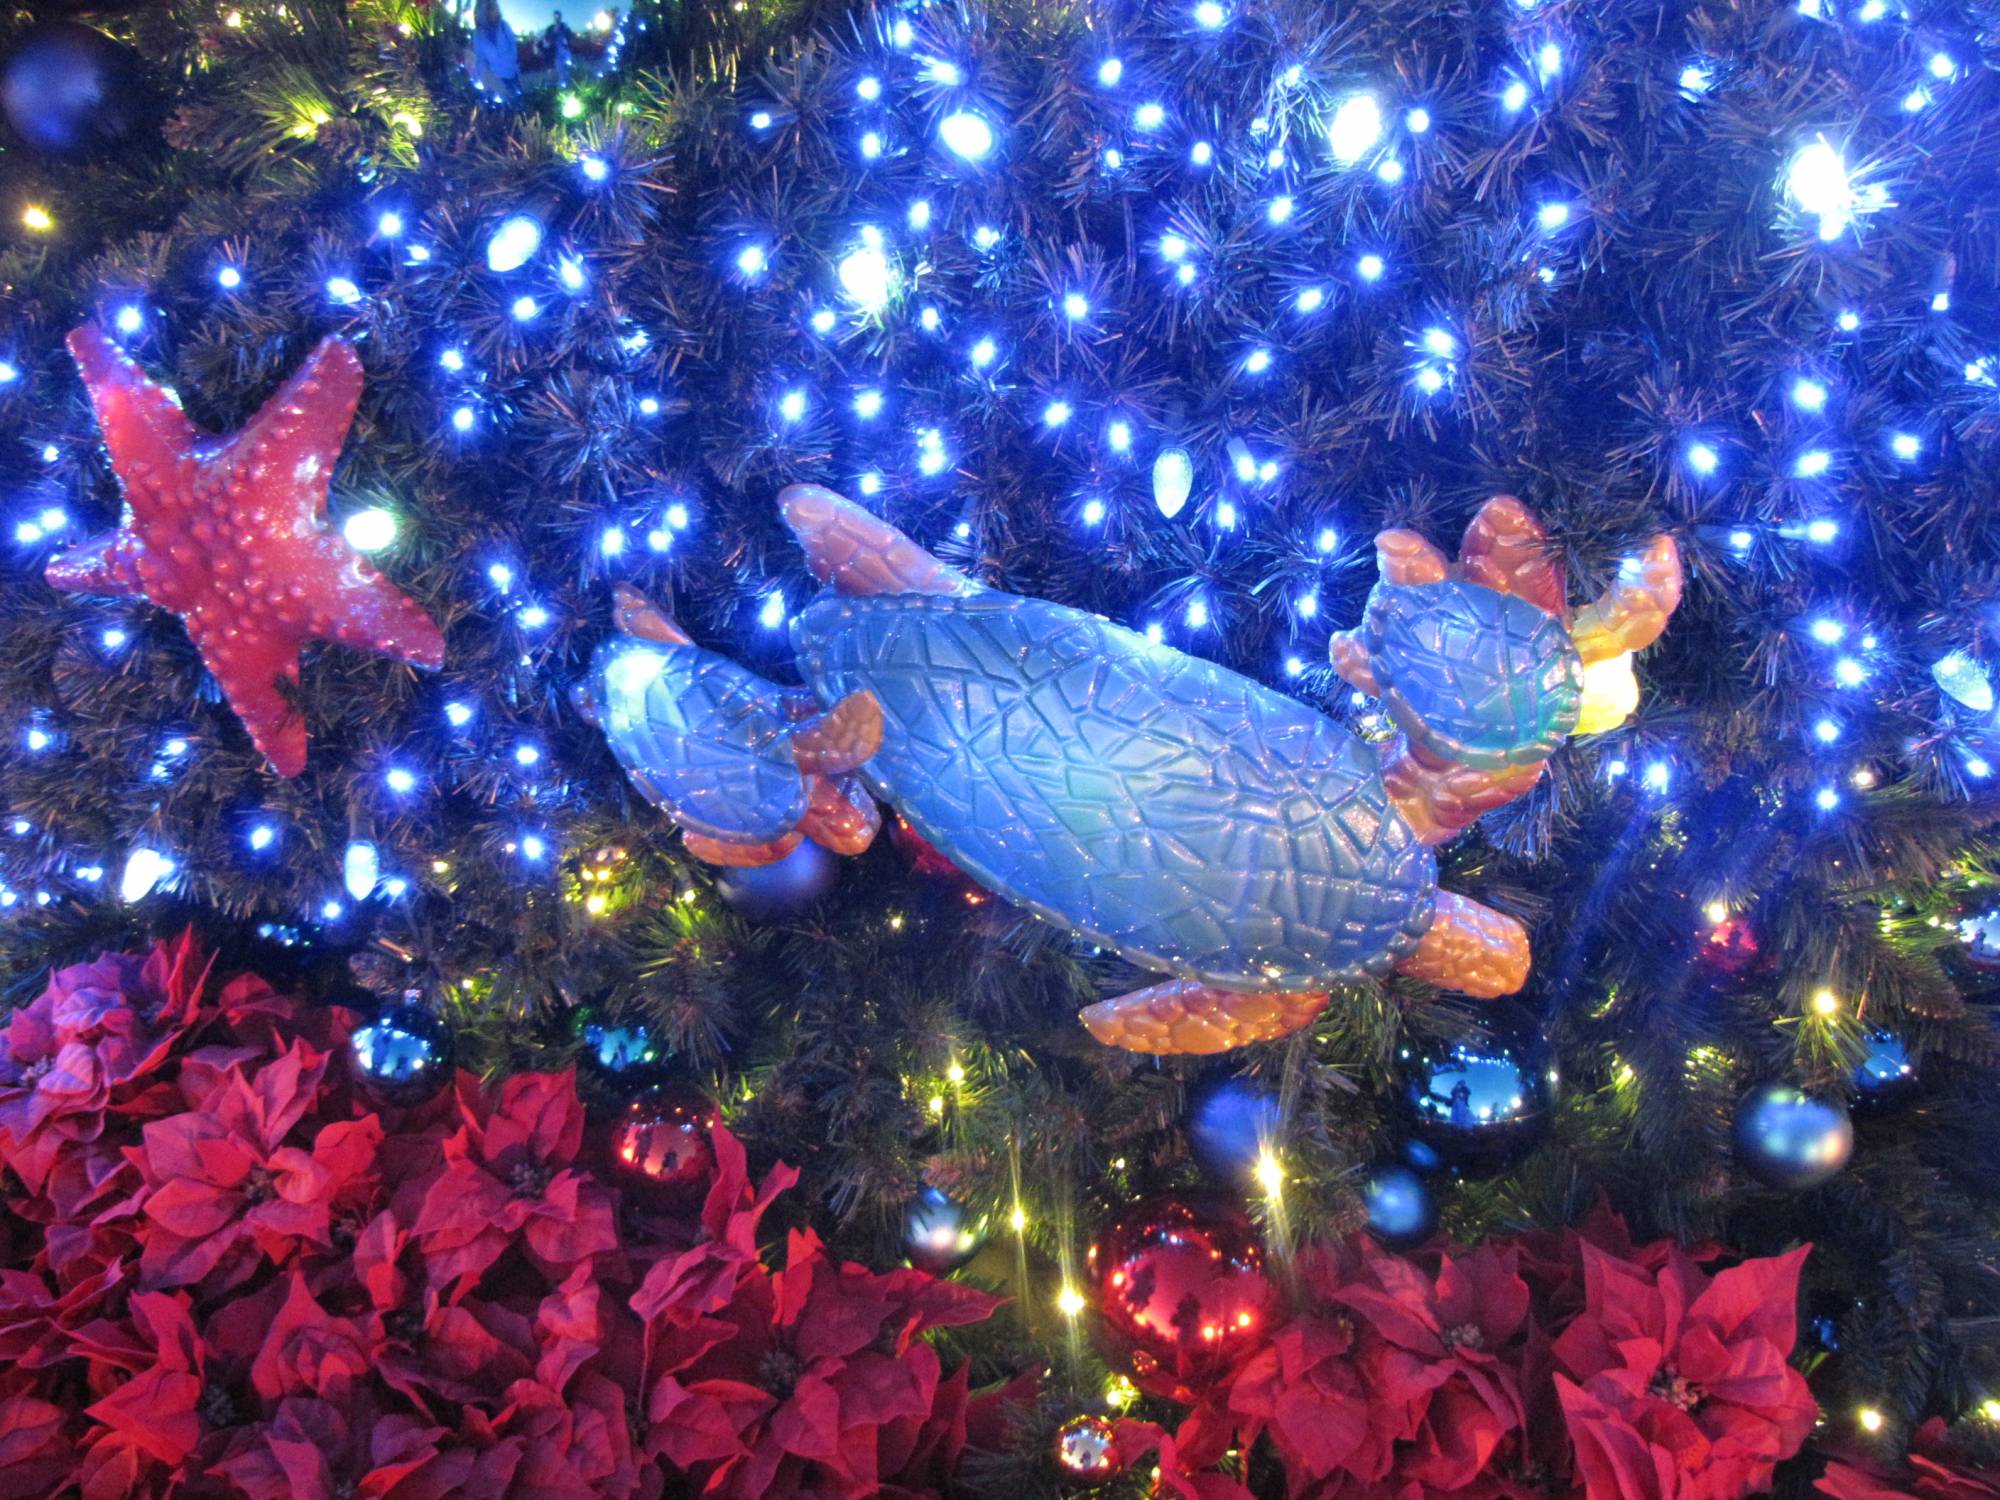 Enjoy the holiday festivities at SeaWorld San Diego | PassPorter.com